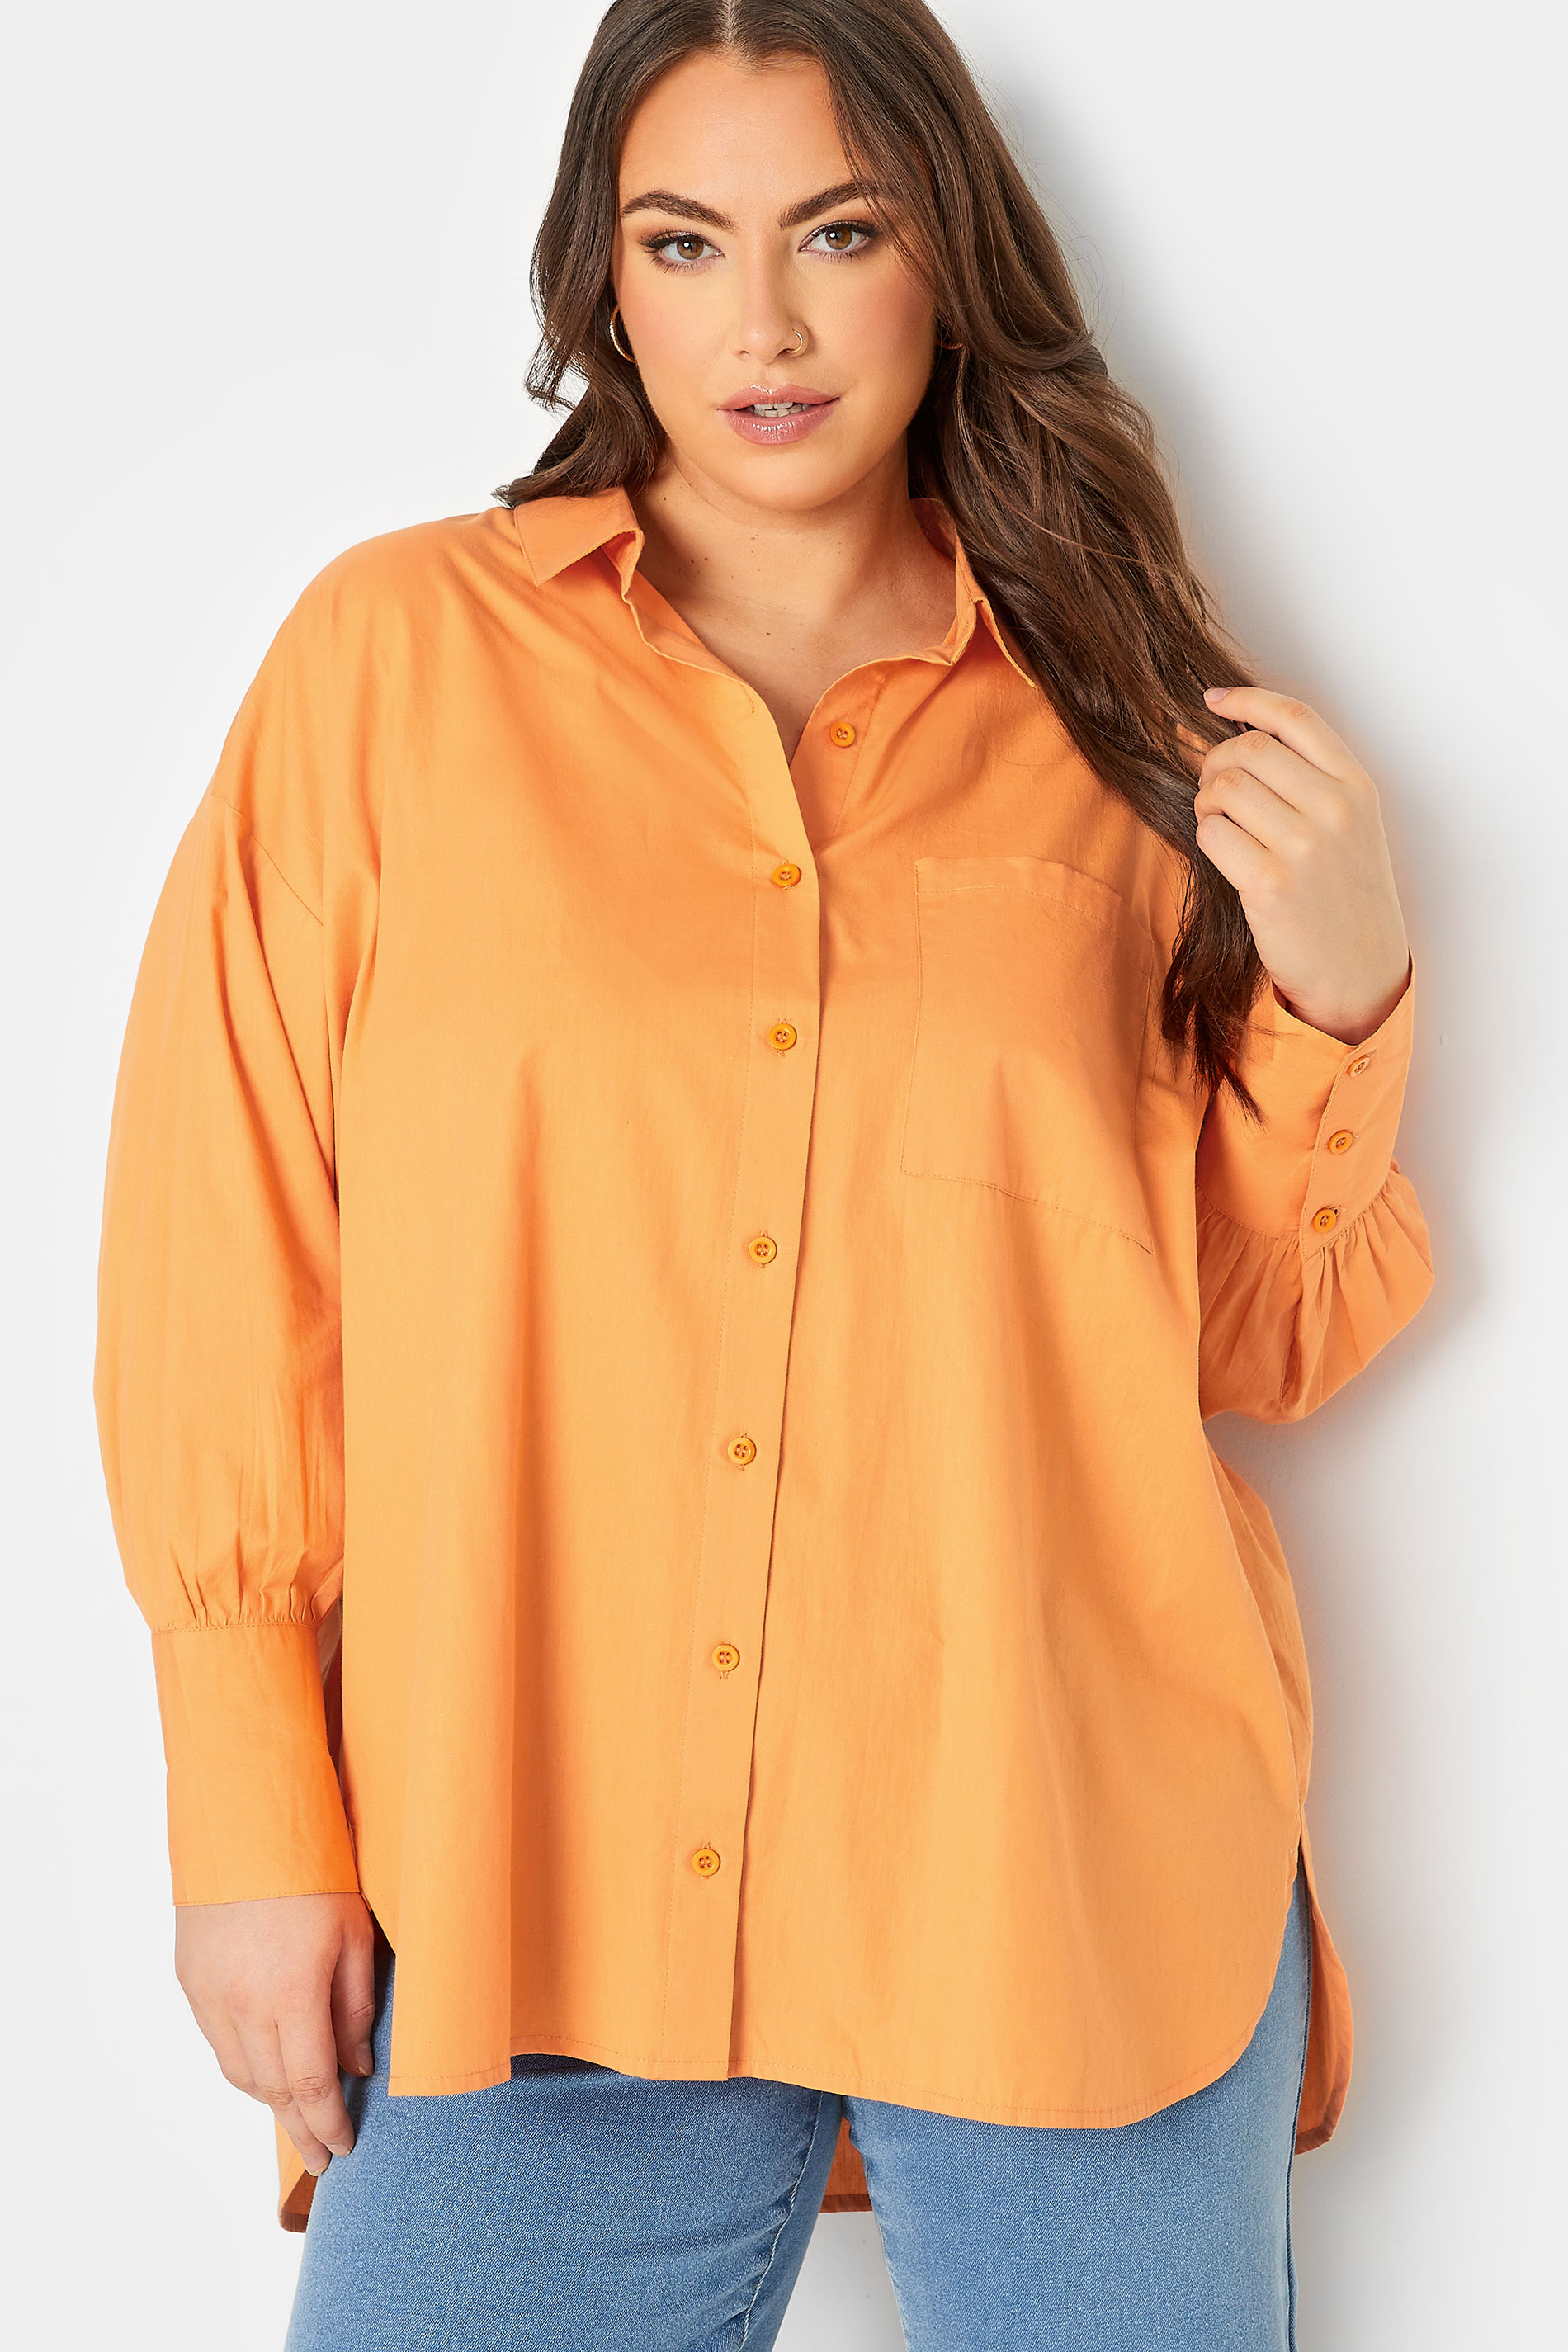 YOURS Curve Bright Orange Oversized Poplin Shirt | Yours Clothing  1